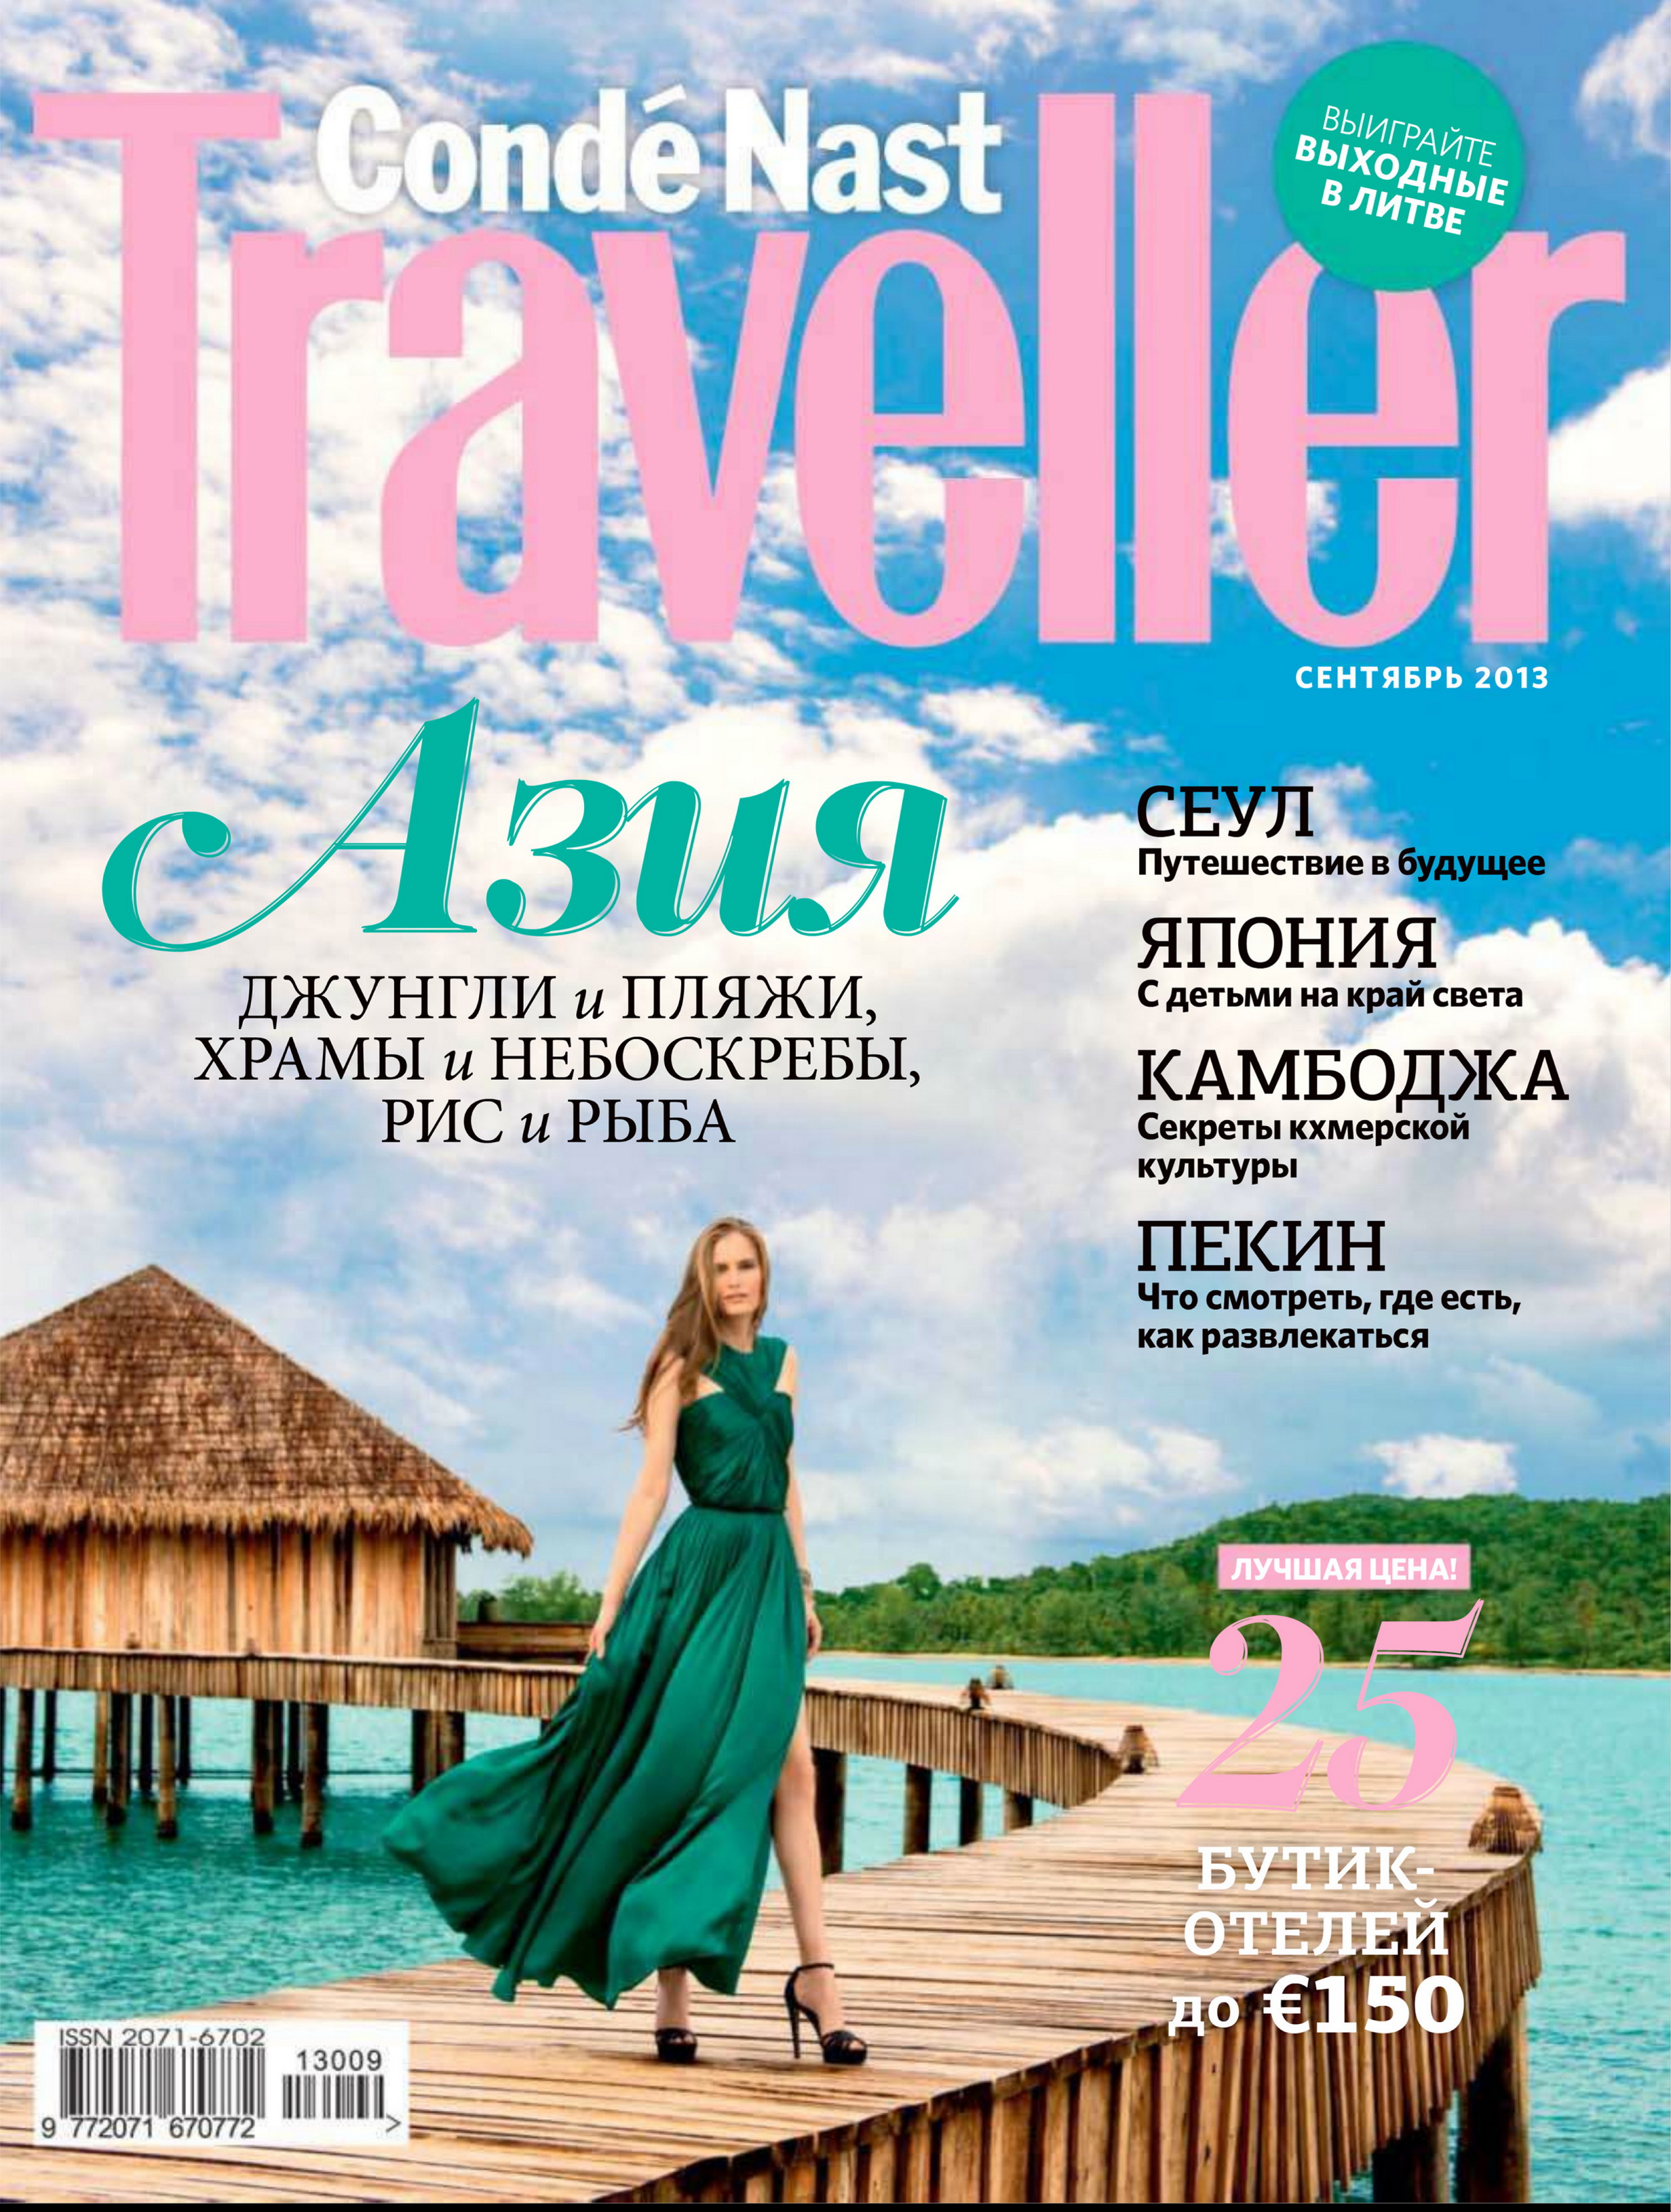 Конде наст. Конде наст Тревеллер. Conde Nast traveller журналы. Обложка журнала путешествий. Журнал о путешествиях.